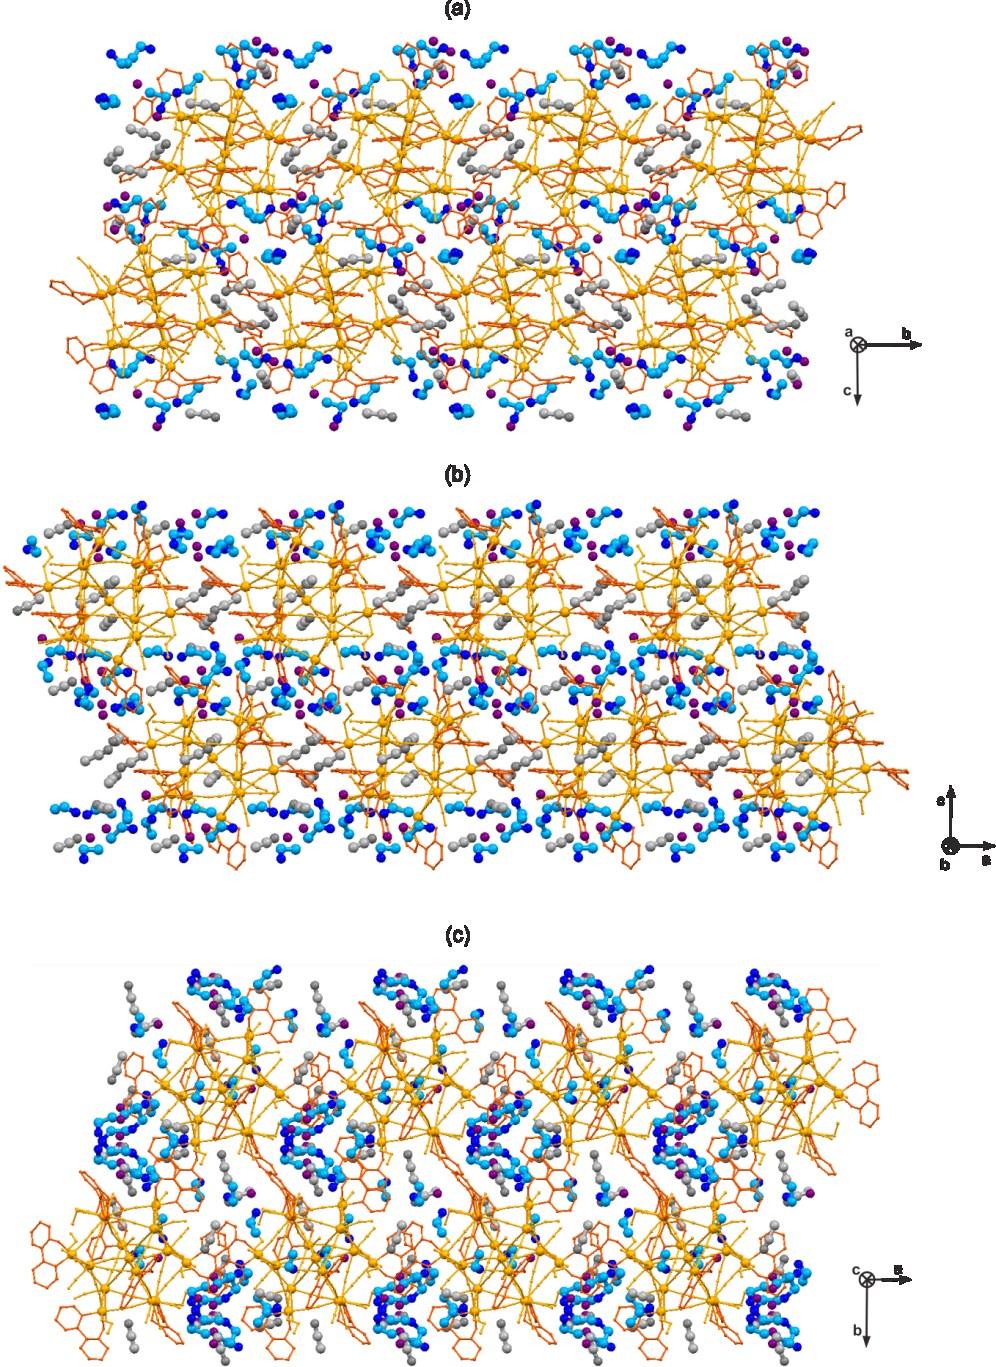 Figure S10 The supramolecular arrangement of cyanido-bridged clusters and